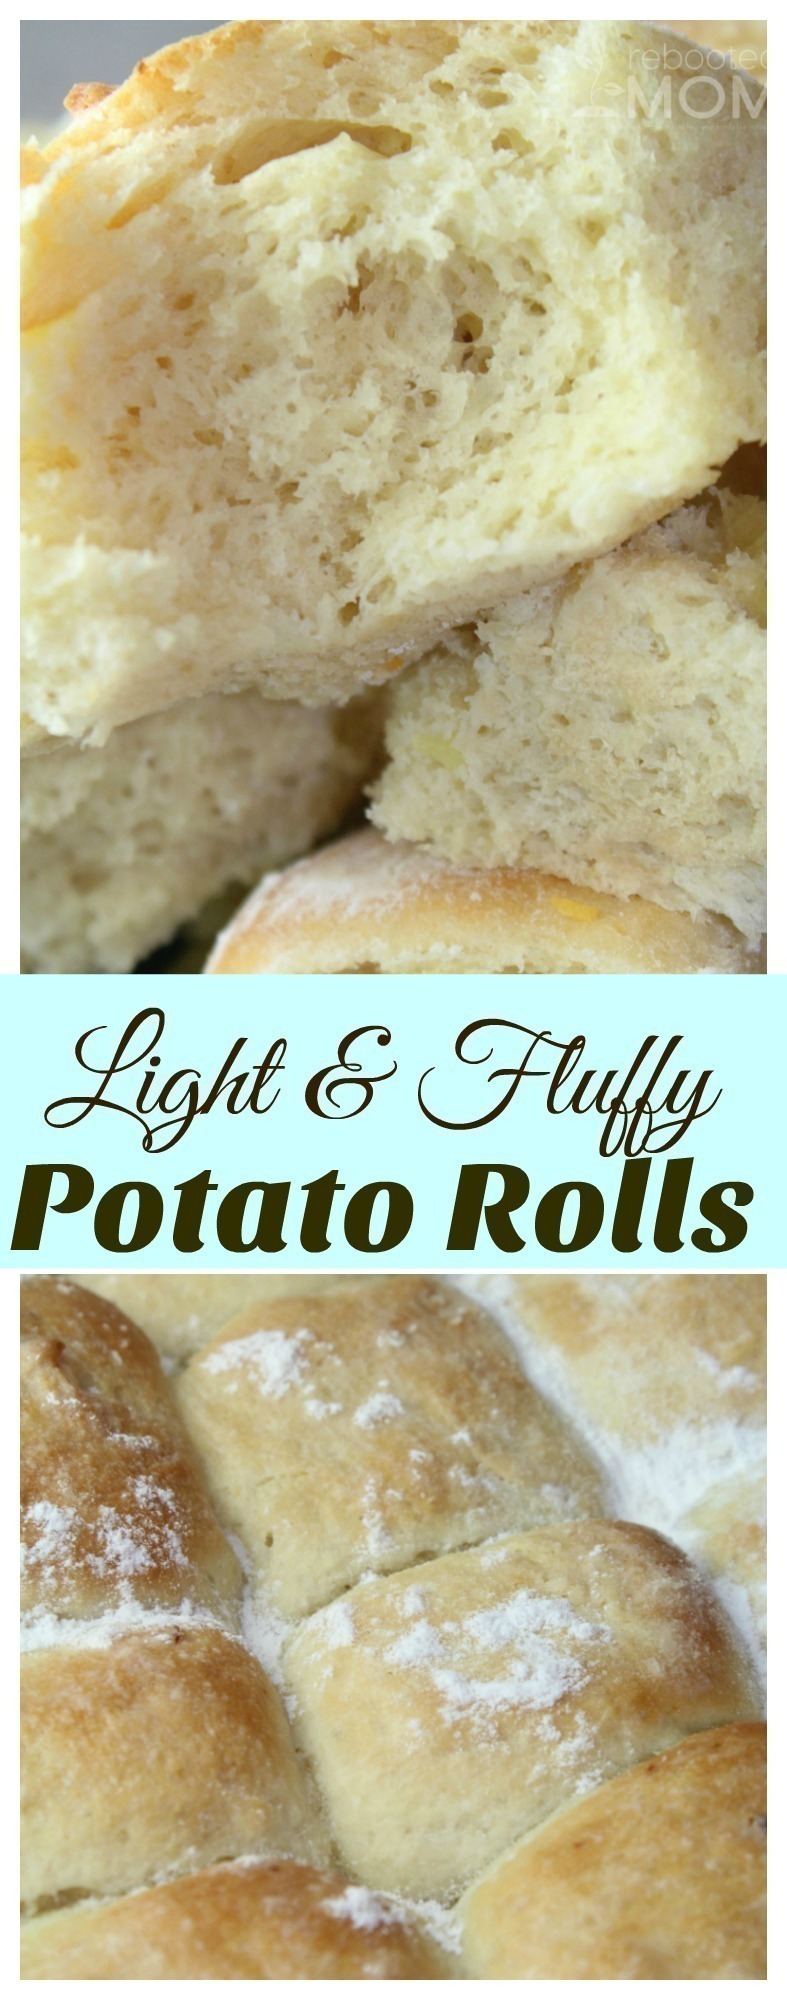 Light & Fluffy Potato Rolls